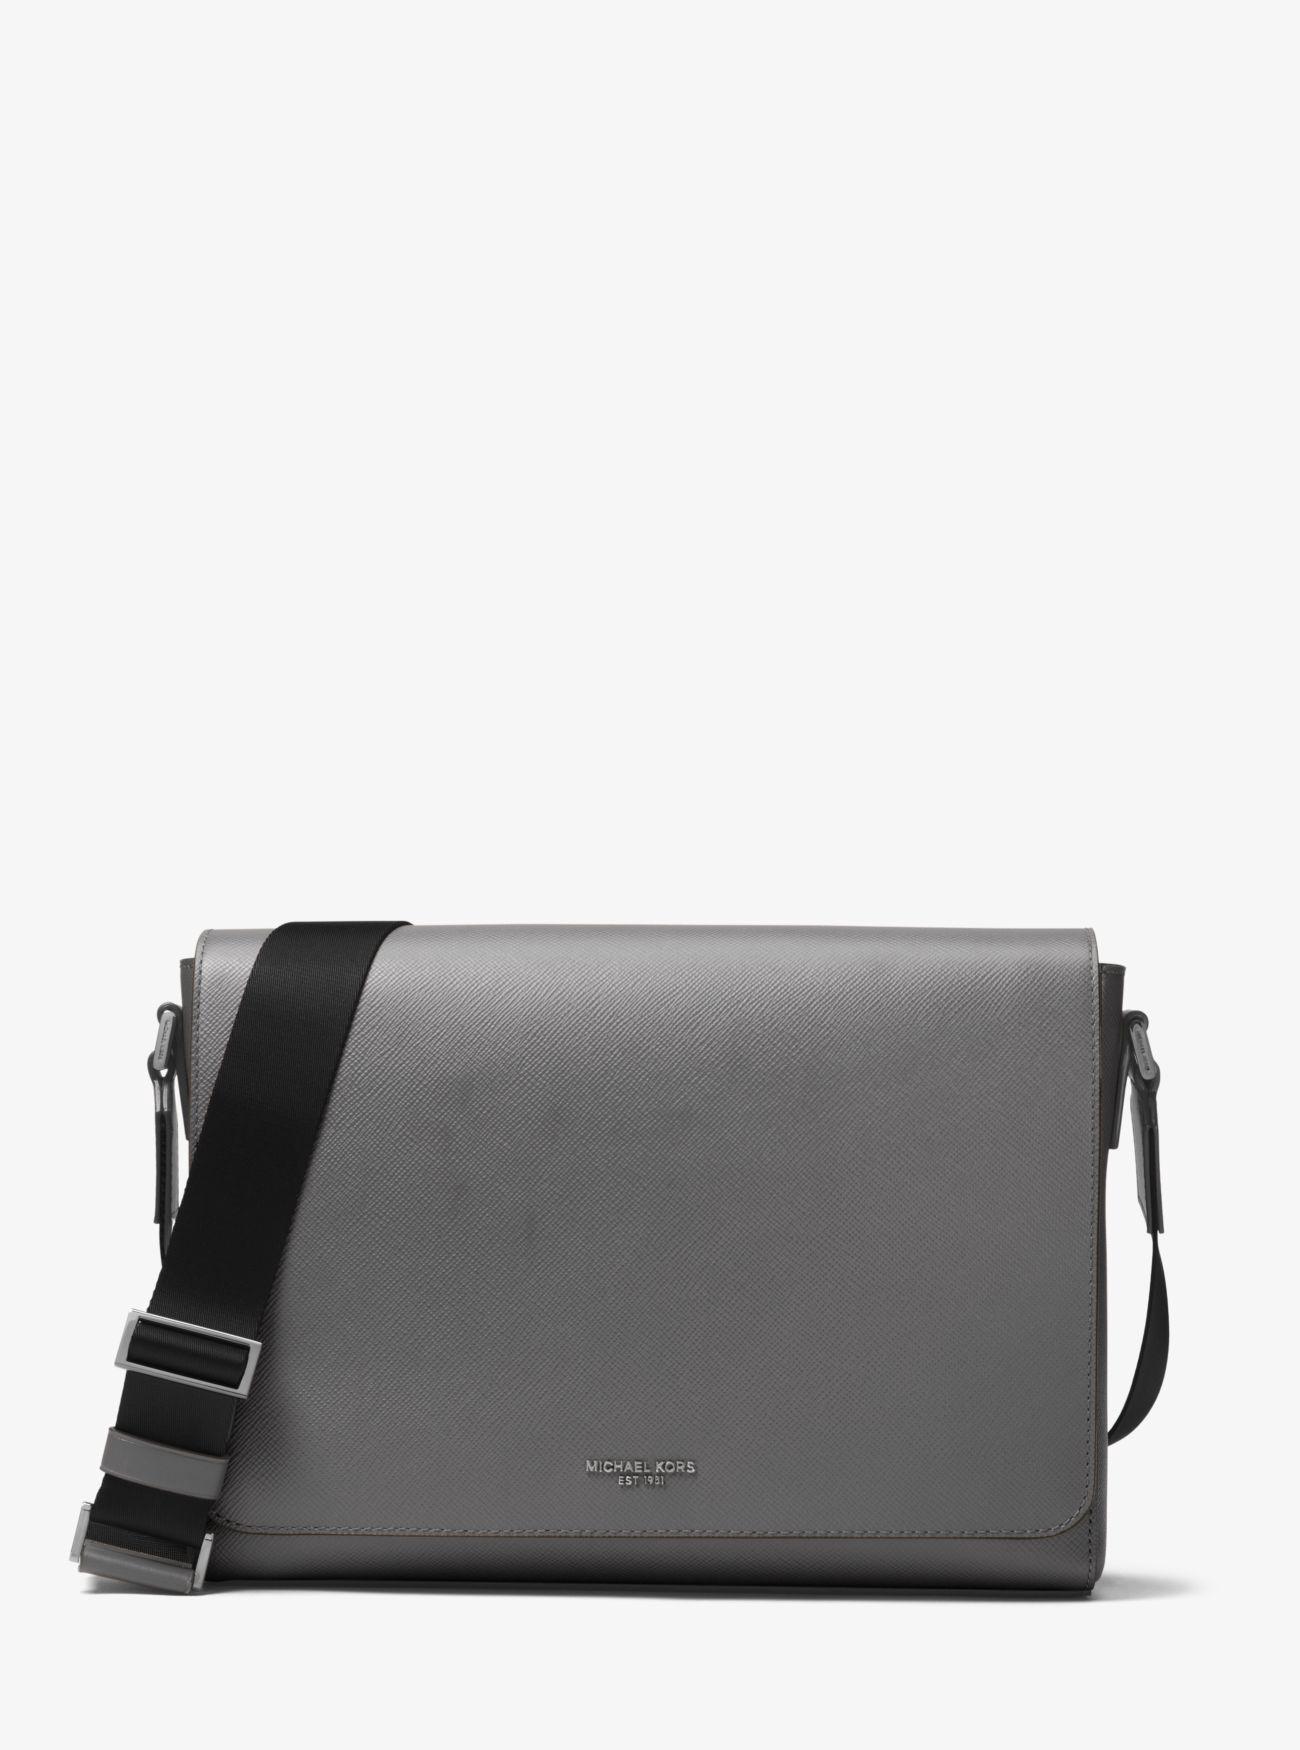 harrison medium leather messenger bag